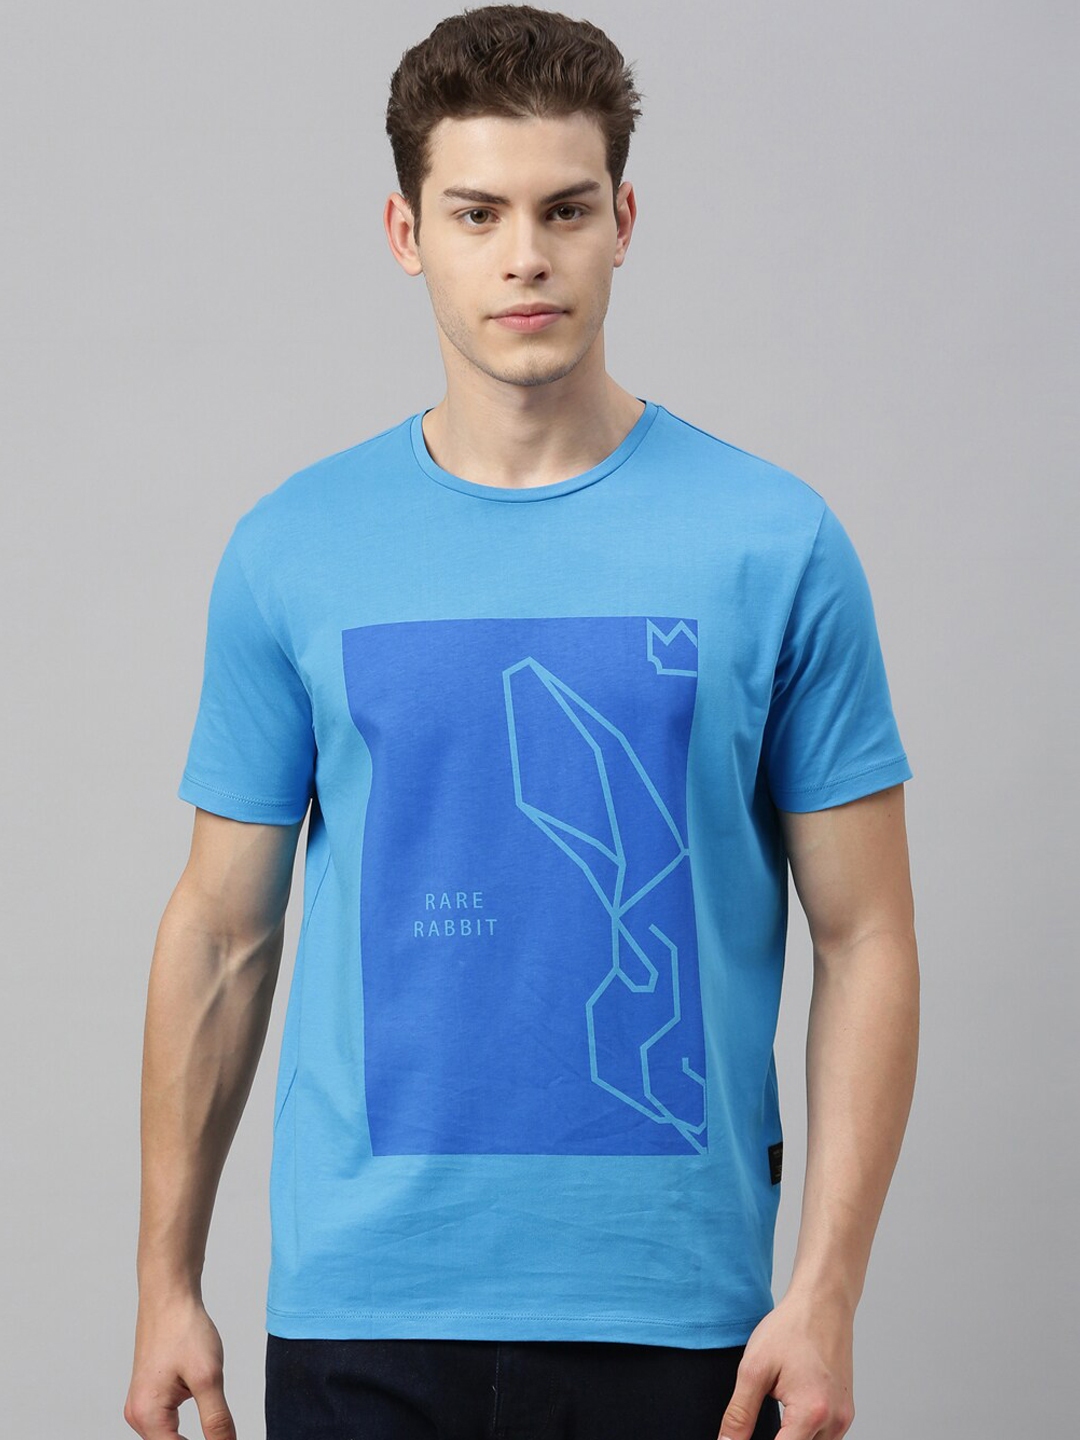 Buy RARE RABBIT Men Blue Printed Round Neck T Shirt - Tshirts for Men ...